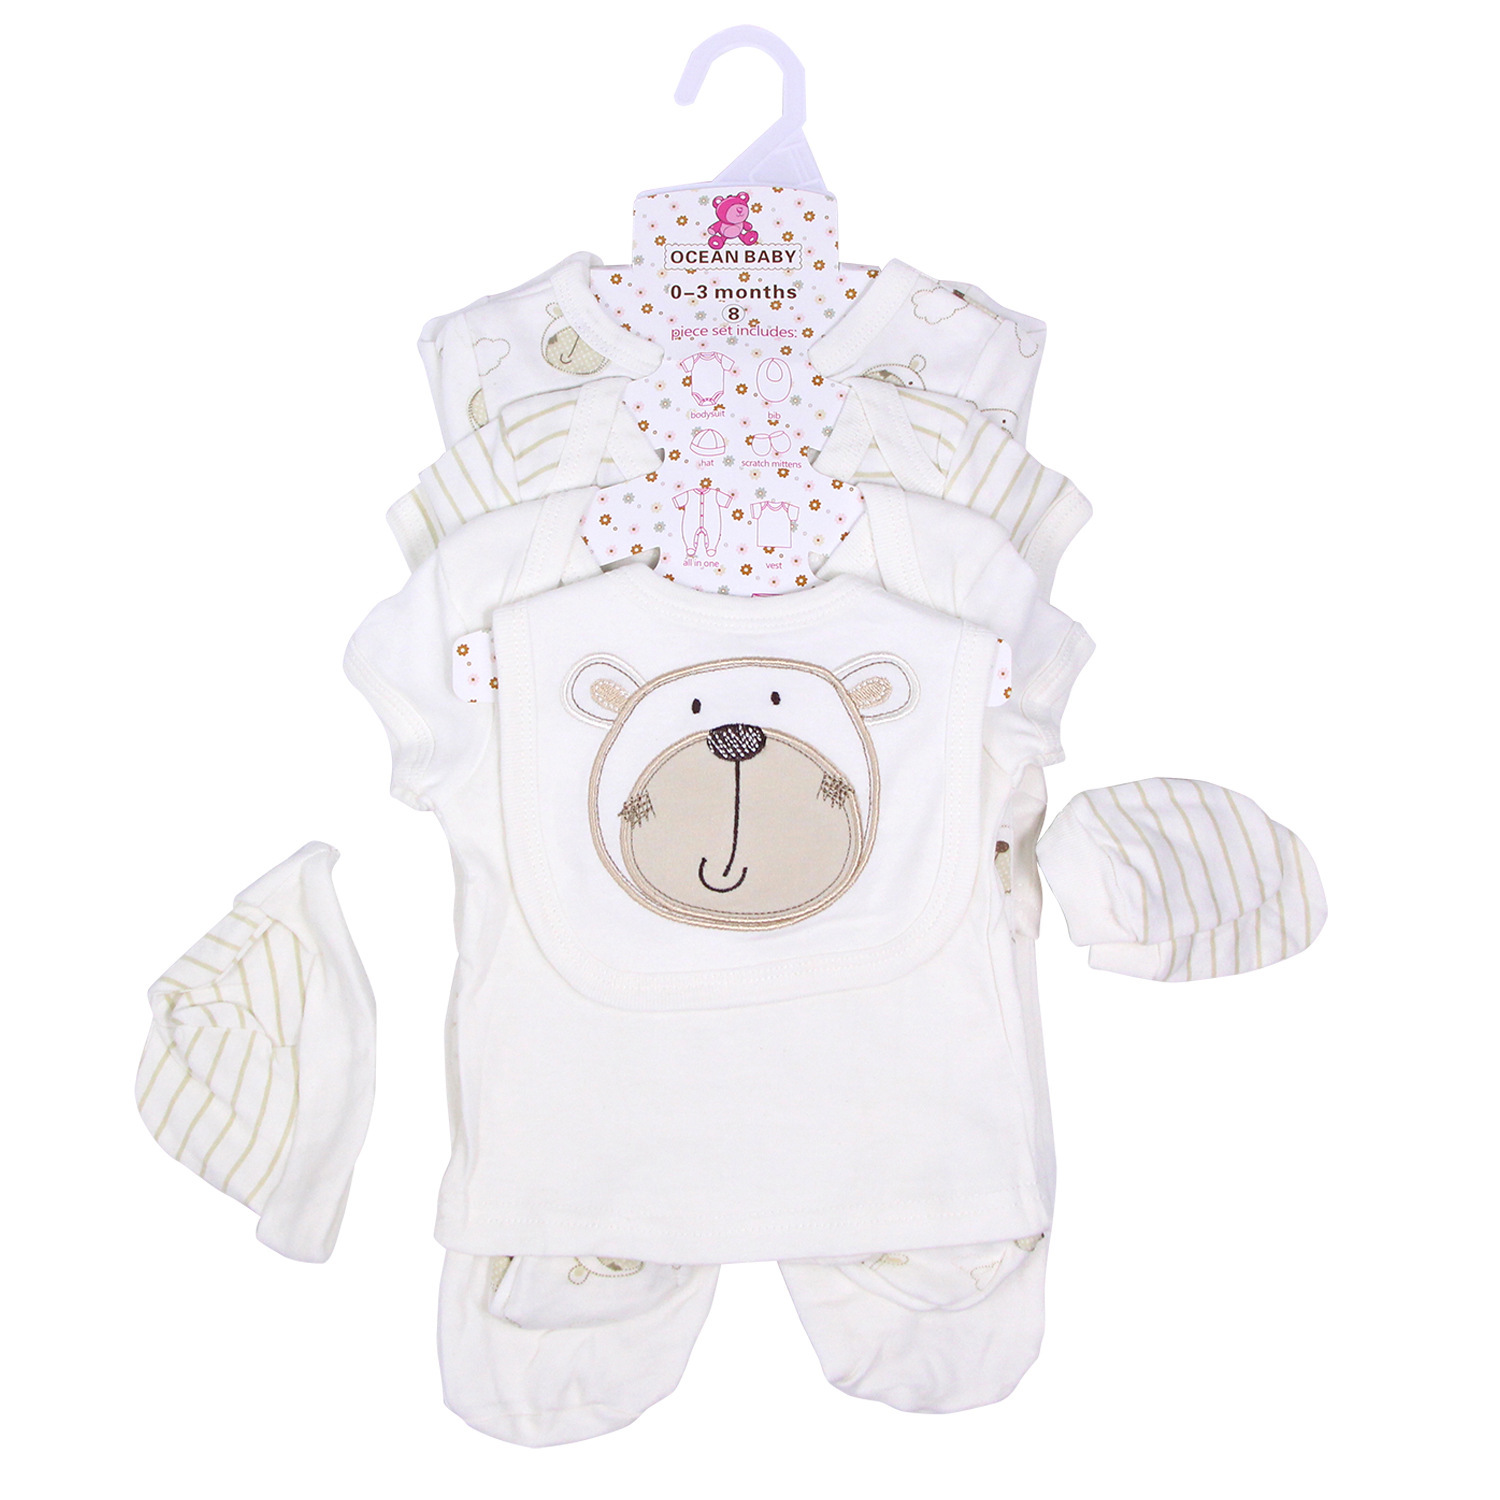 Foreign Trade Newborn Infant Cotton Five-Piece Suit Rompers Jumpsuit Baby Rompers Suit Match Sets Children‘s Clothing